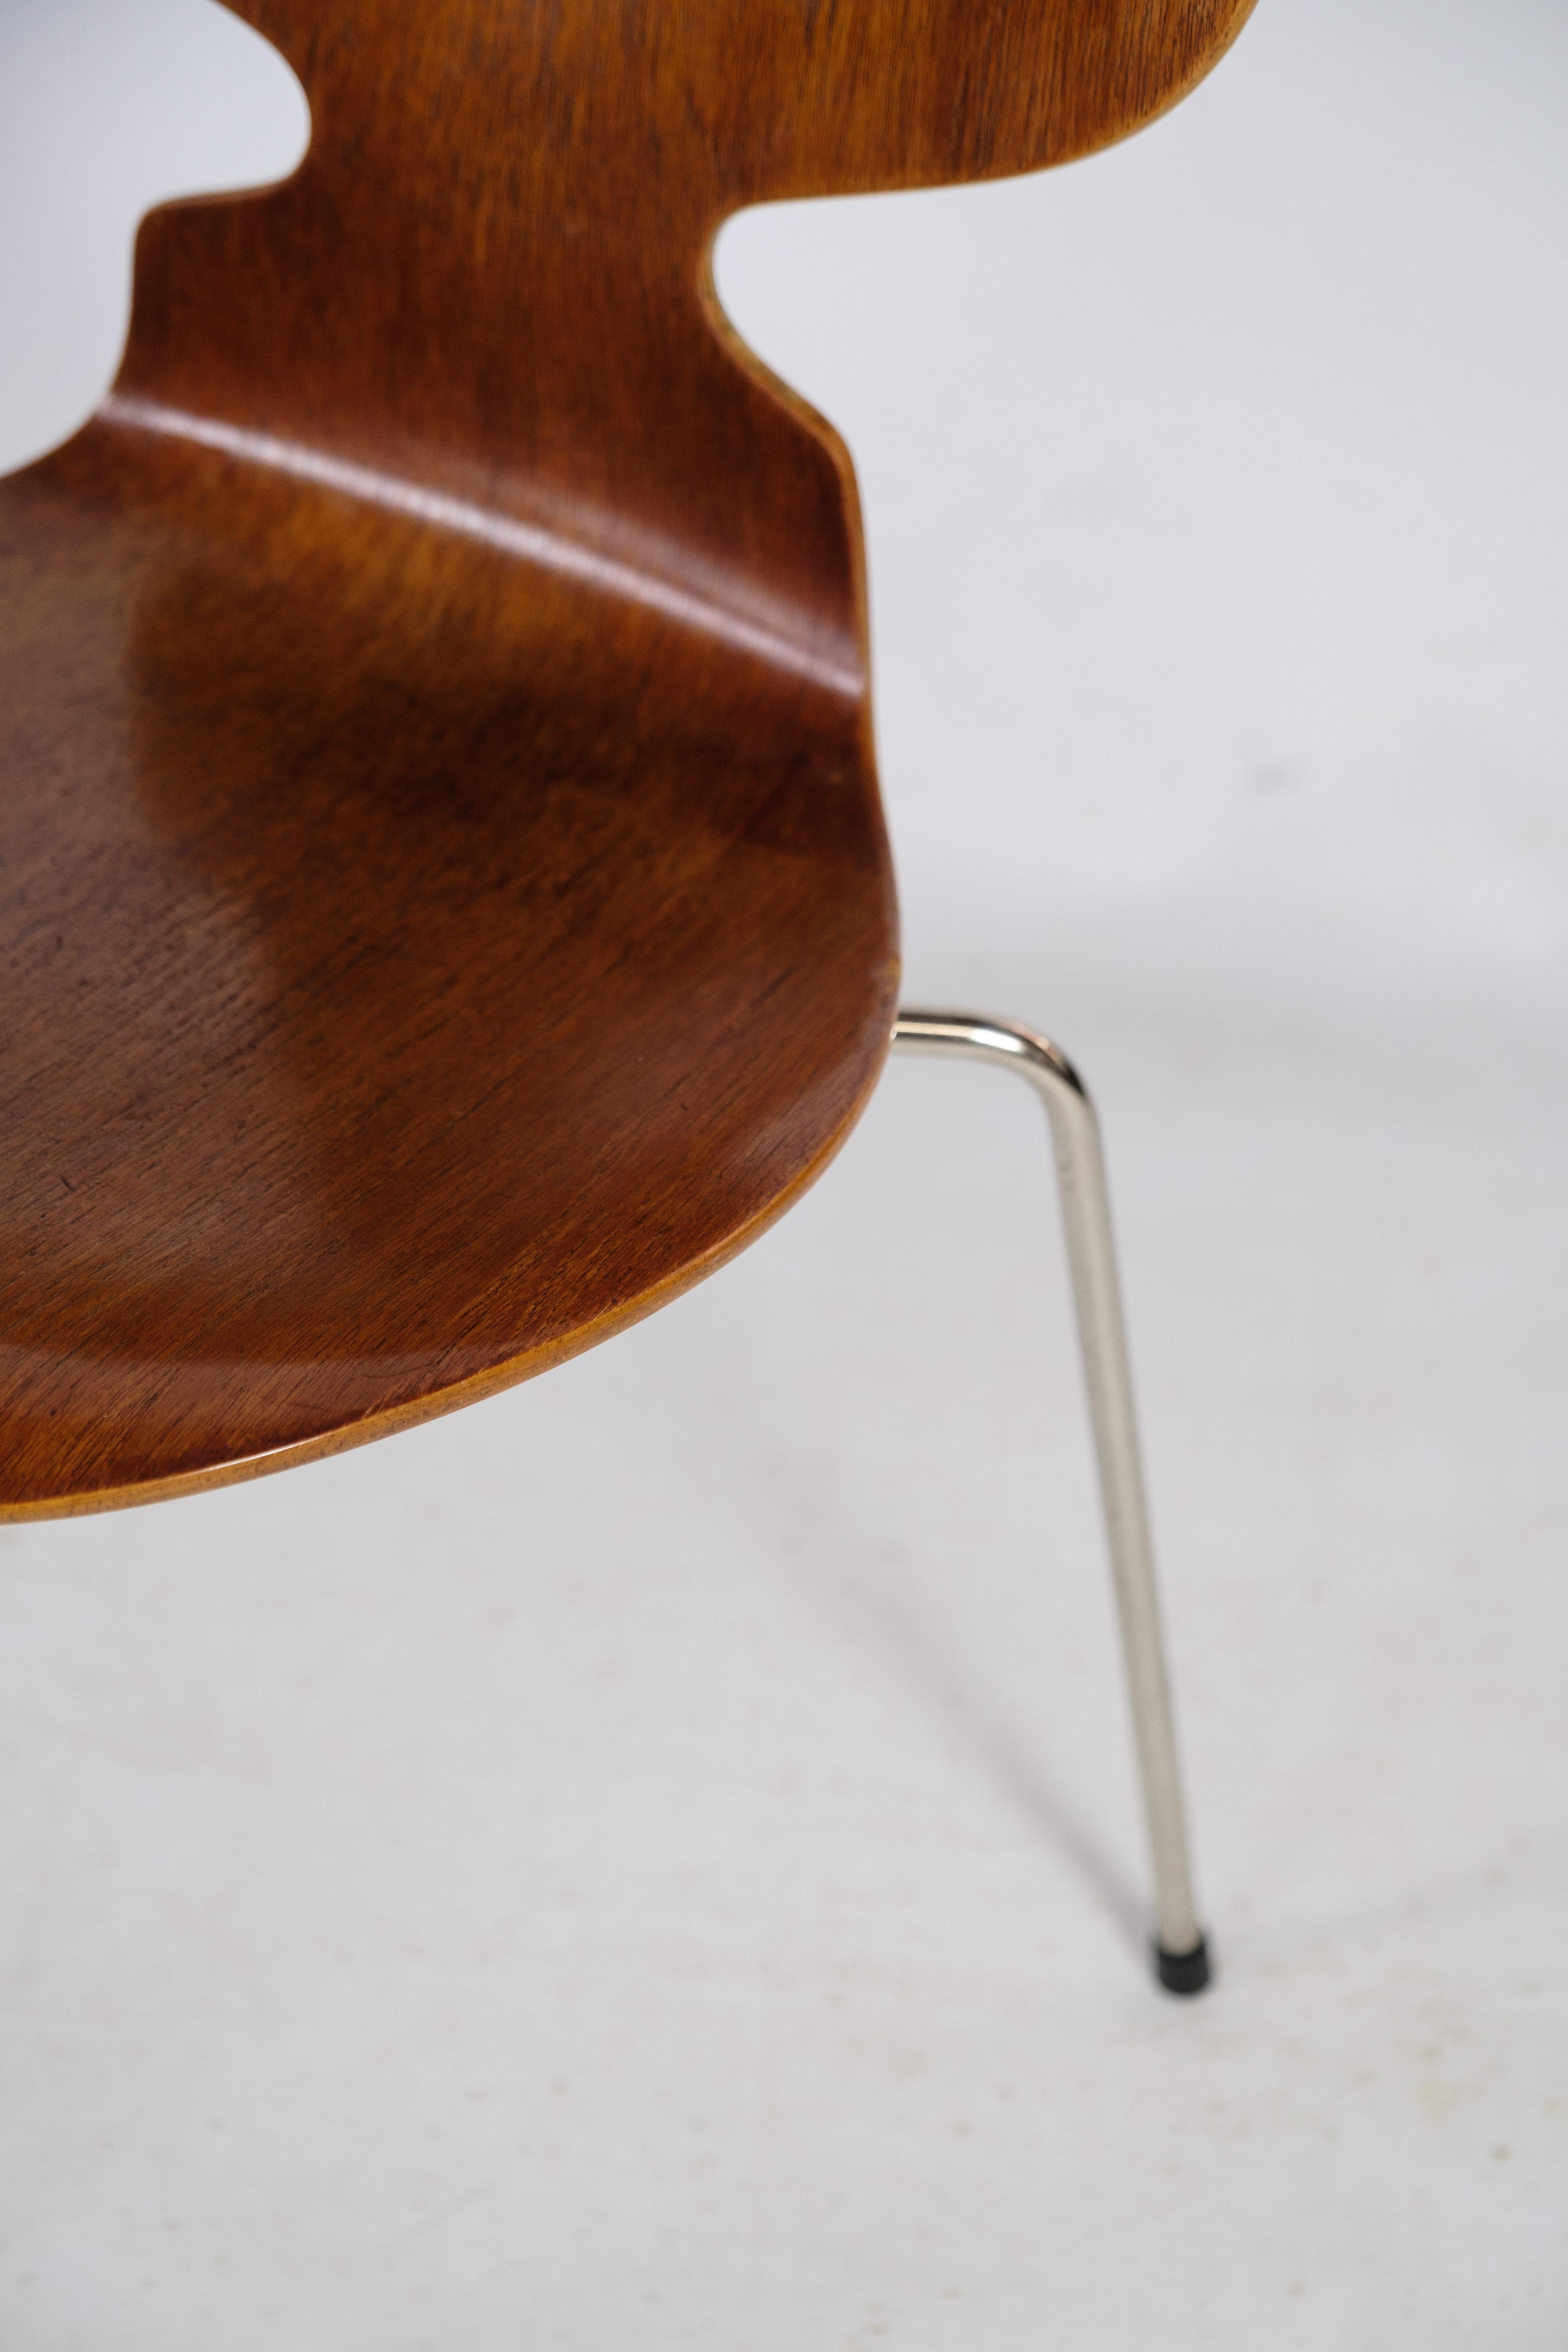 Mid-20th Century Set of Four Ant Chairs, Model 3100, Arne Jacobsen '1902-1971', Teak Wood